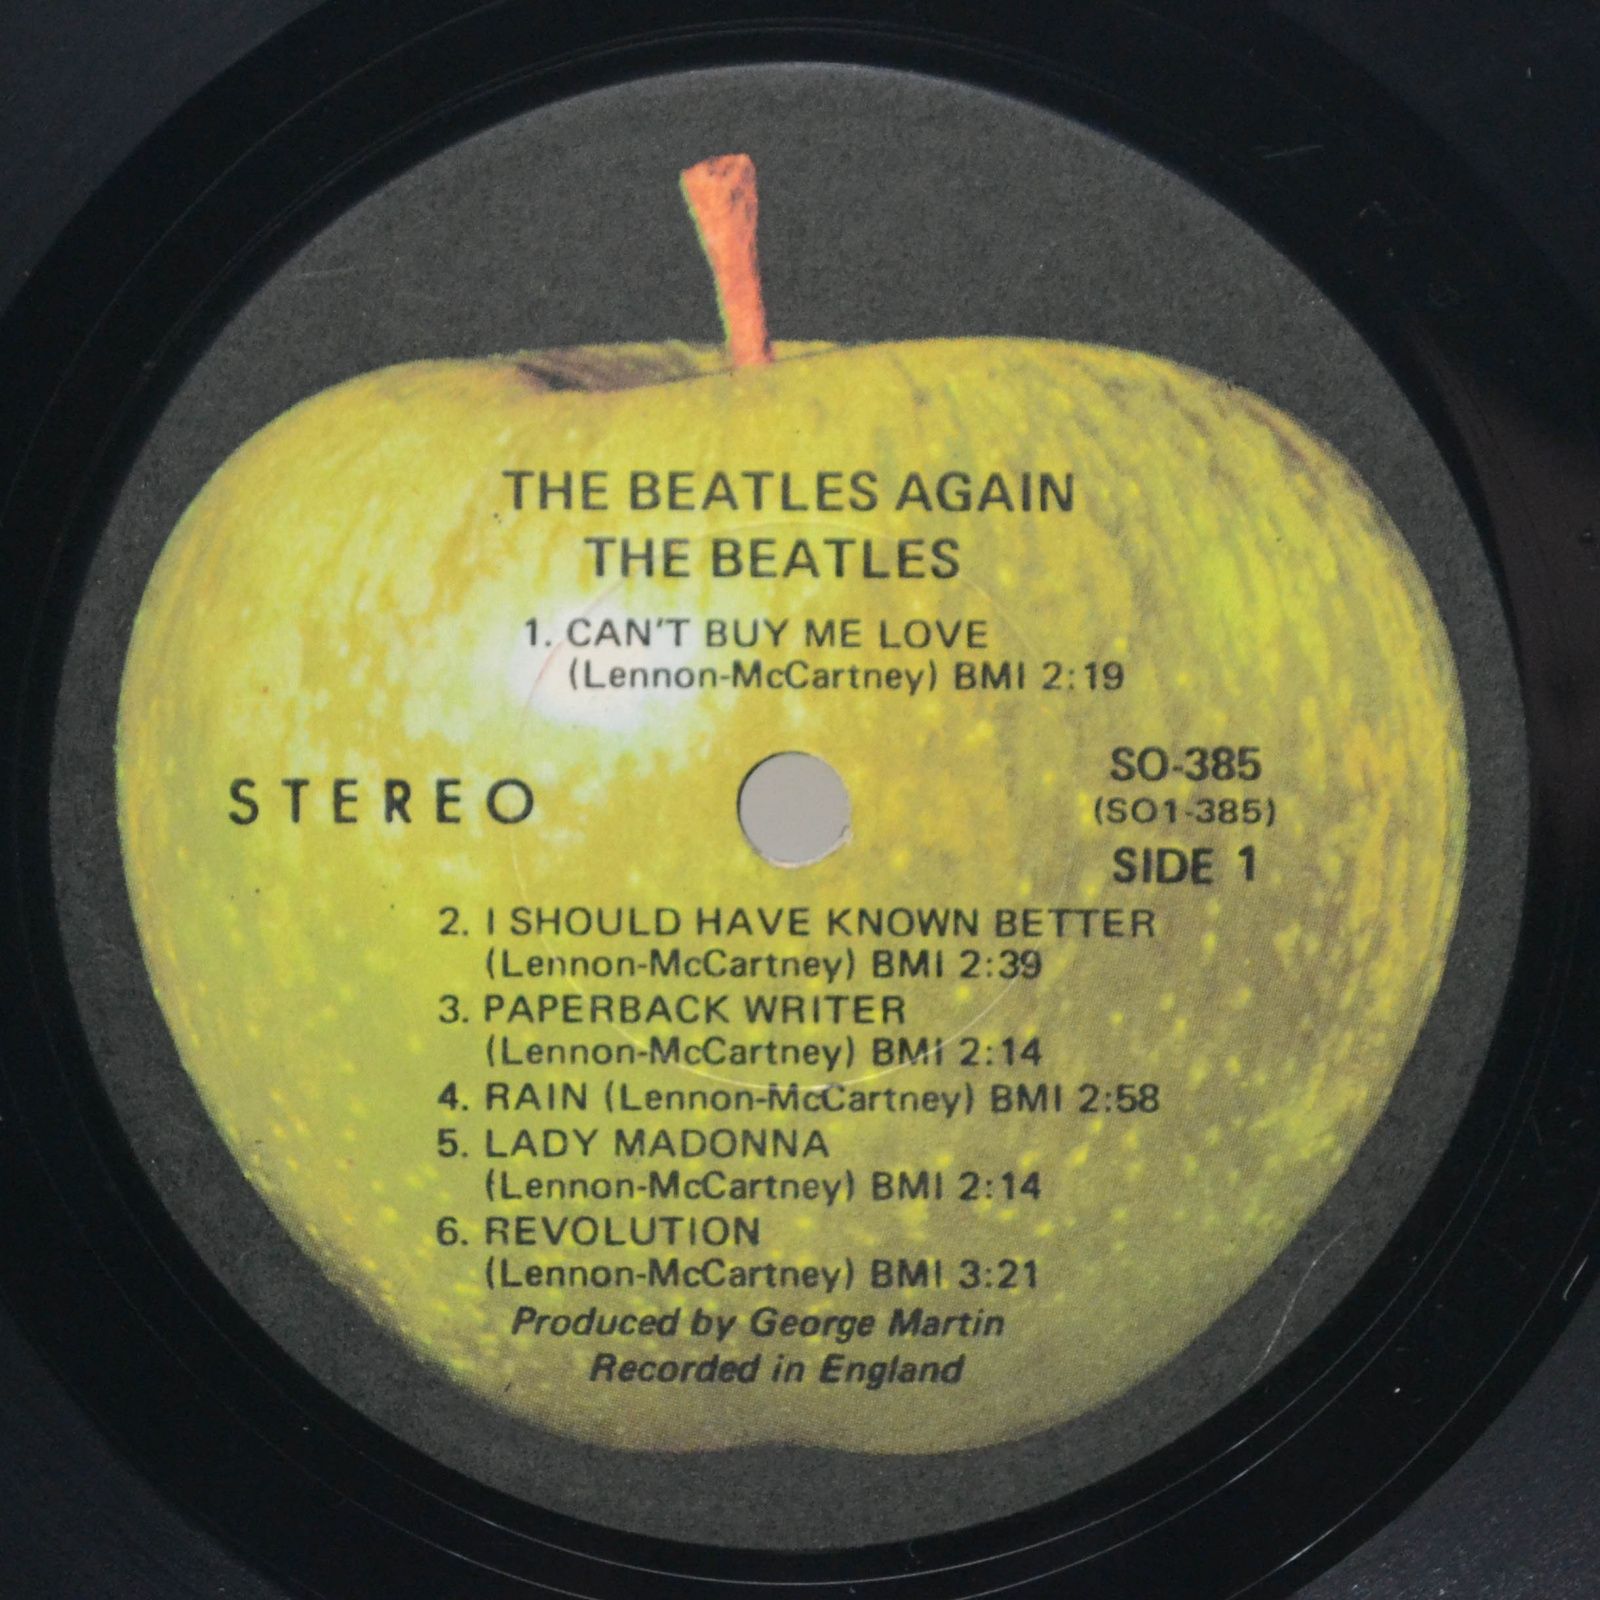 Beatles — Hey Jude (The Beatles Again) (USA), 1970